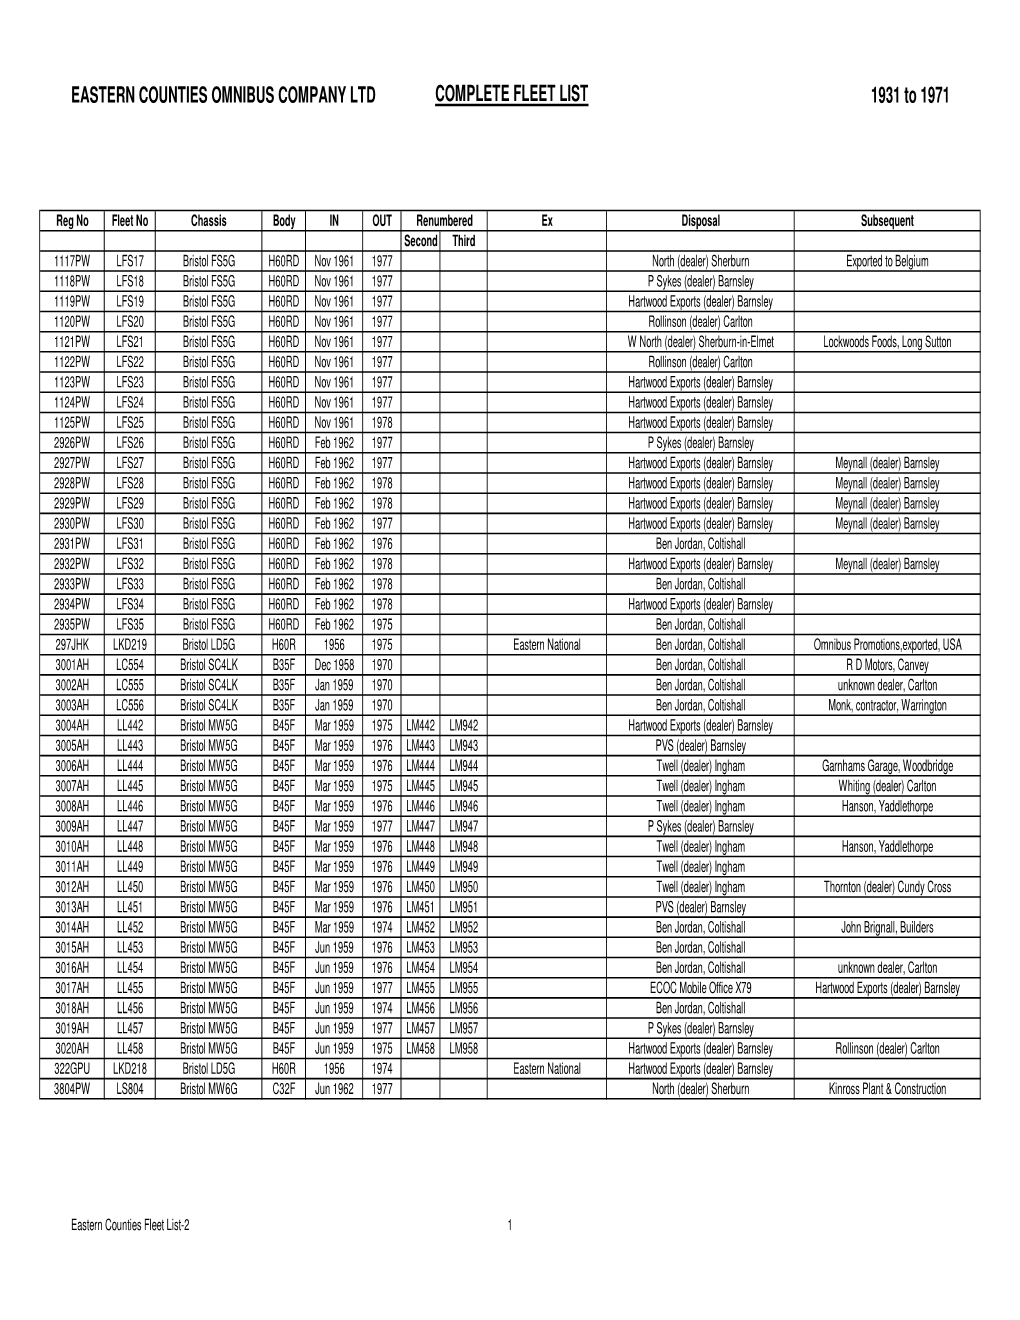 Eastern Counties Fleet List-2 1 EASTERN COUNTIES OMNIBUS COMPANY LTD COMPLETE FLEET LIST 1931 to 1971